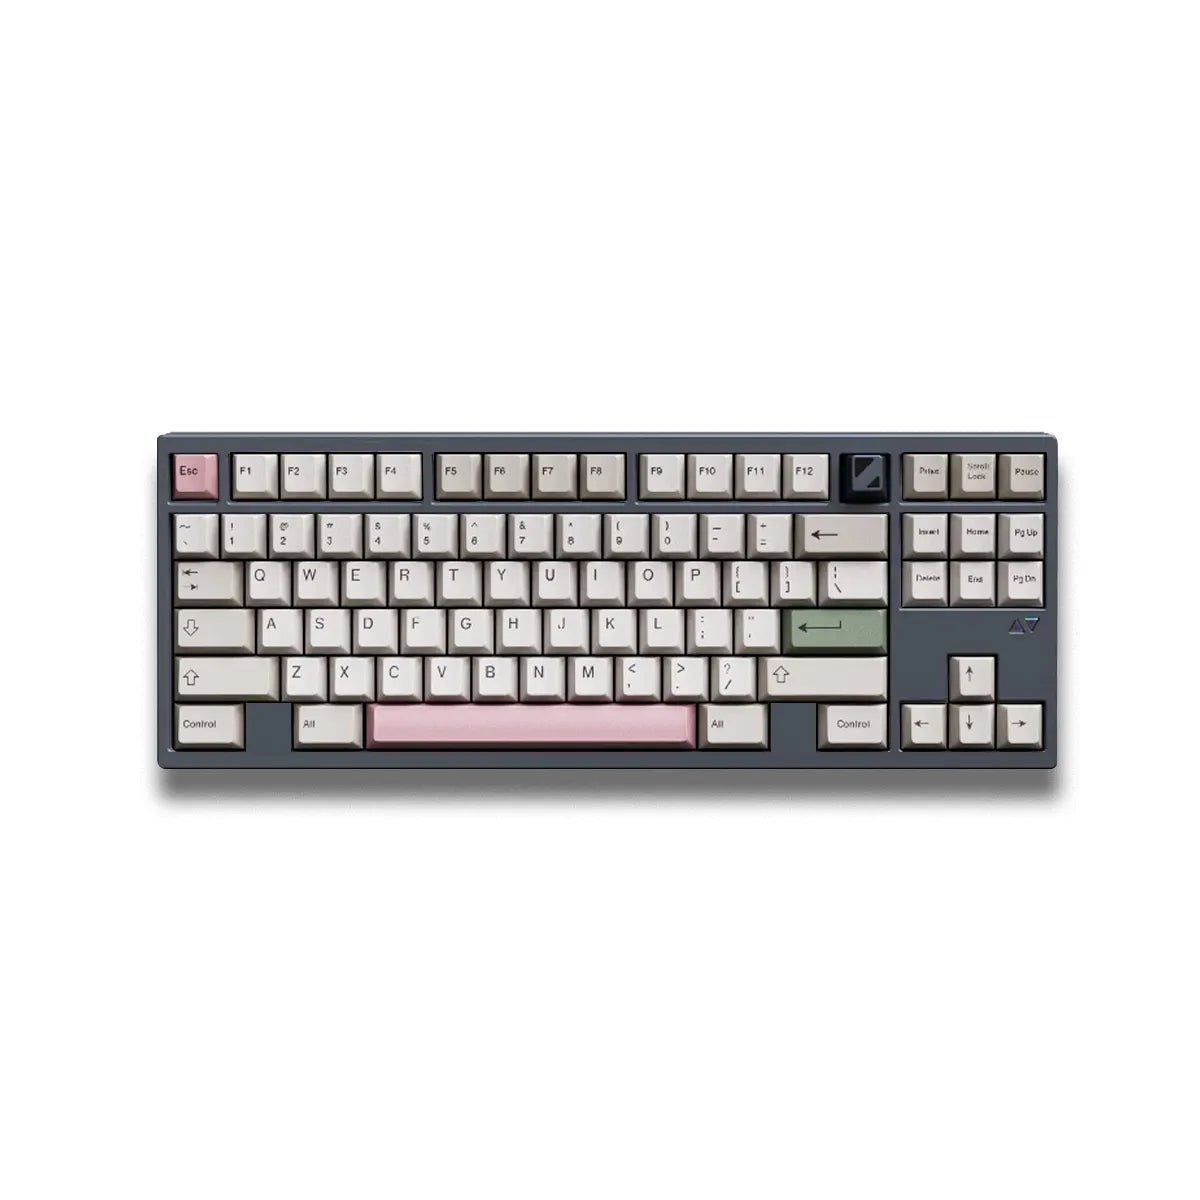 Luminkey80 TKL Keyboard - Divinikey